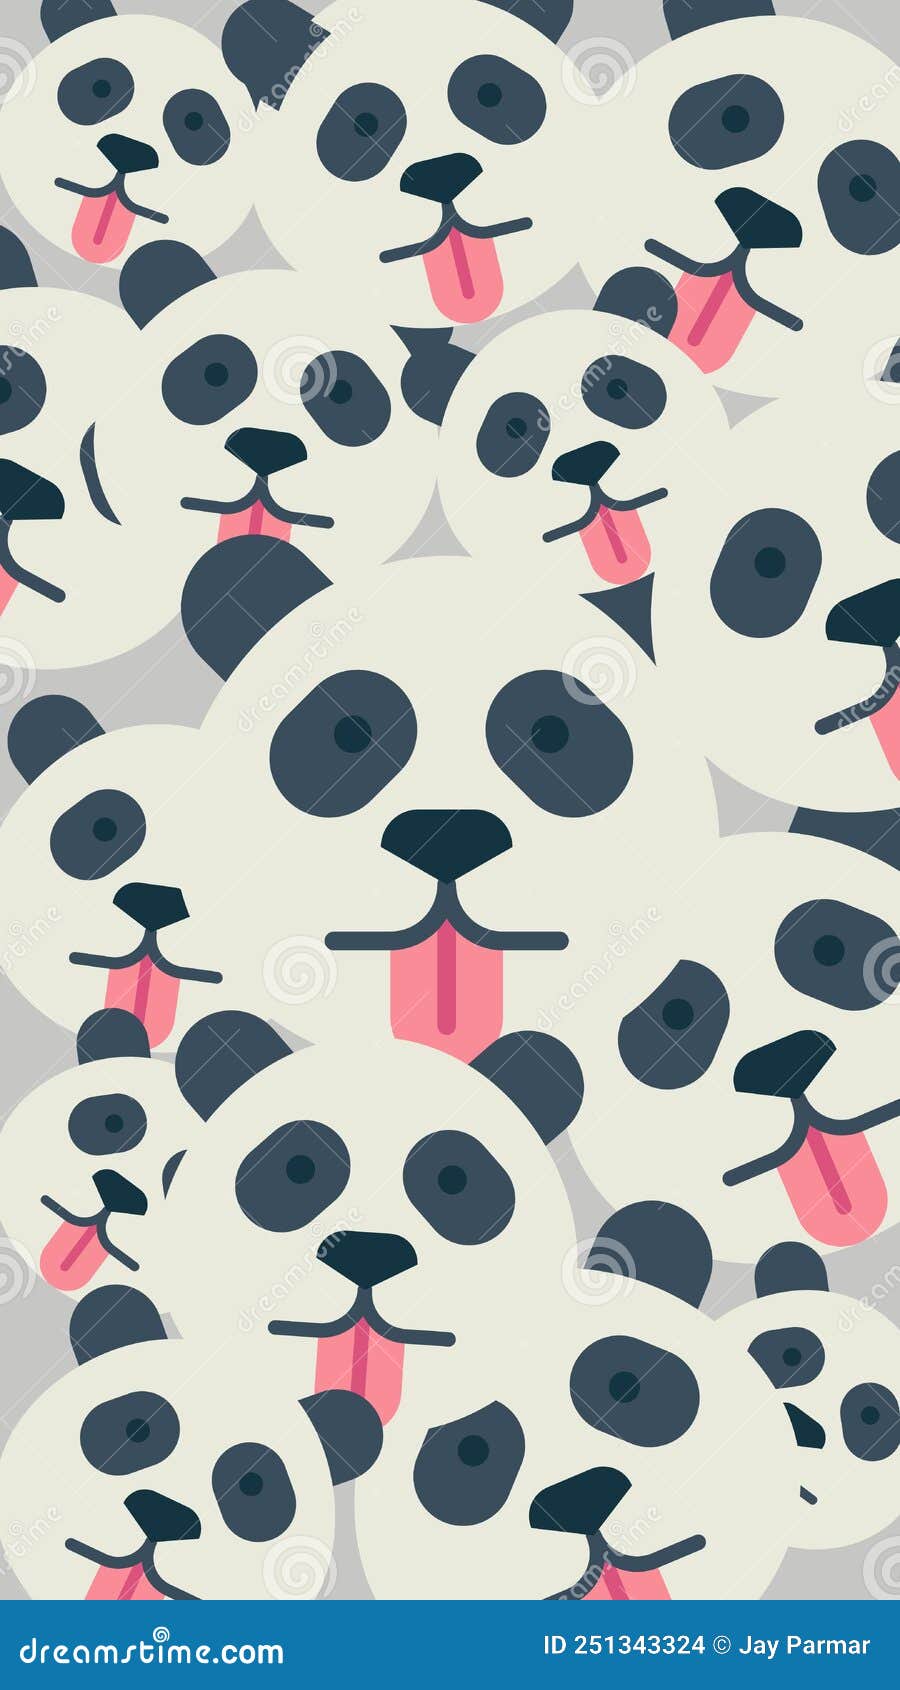 White Blue Grey Pink Abstract Cute Panda S Phone Wallpaper Stock  Illustration - Illustration of panda, brand: 251343324